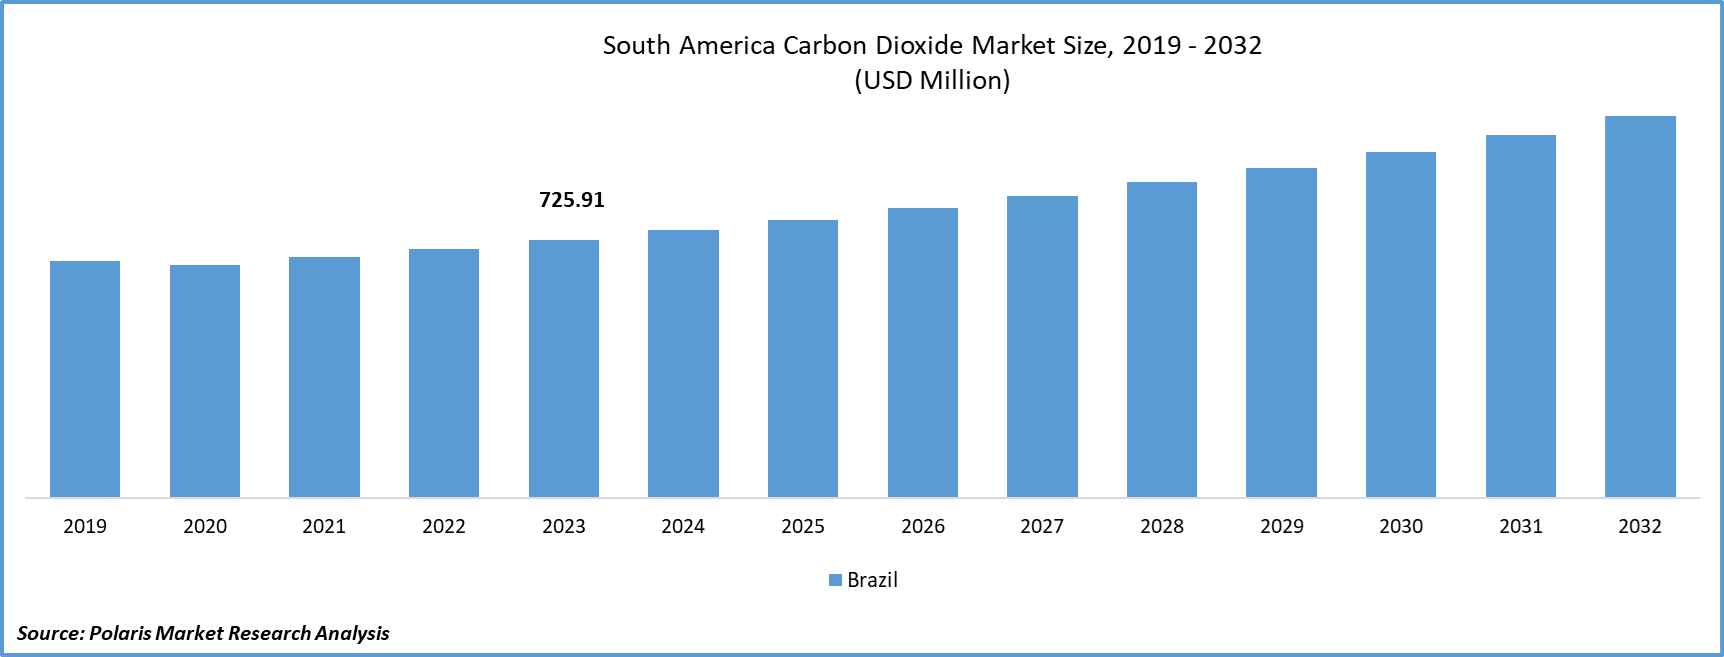 South America Carbon Dioxide Market Size